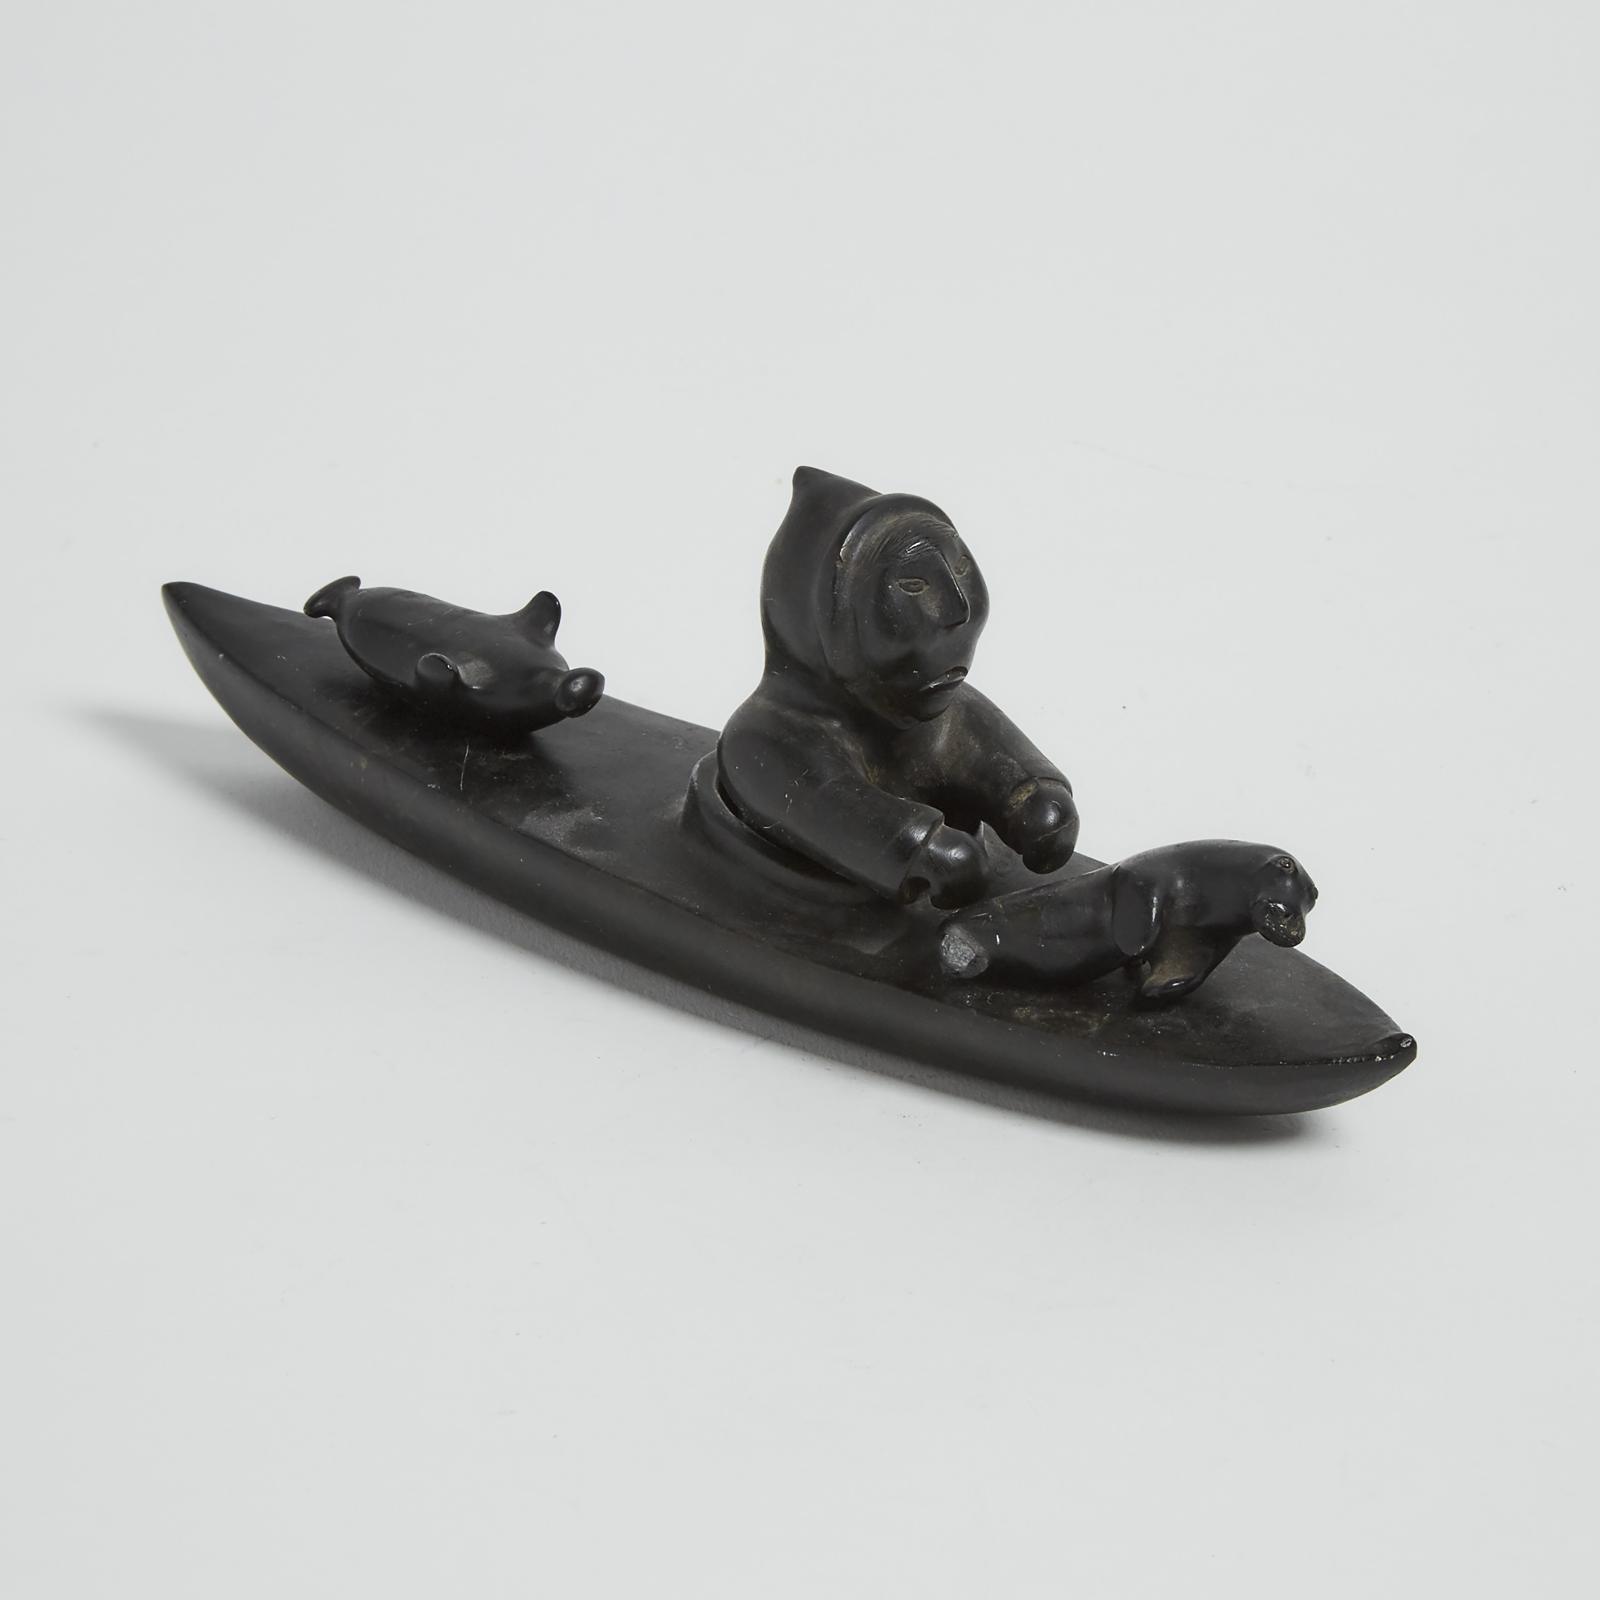 Lucassie Kumarluk (1921) - Kayaker